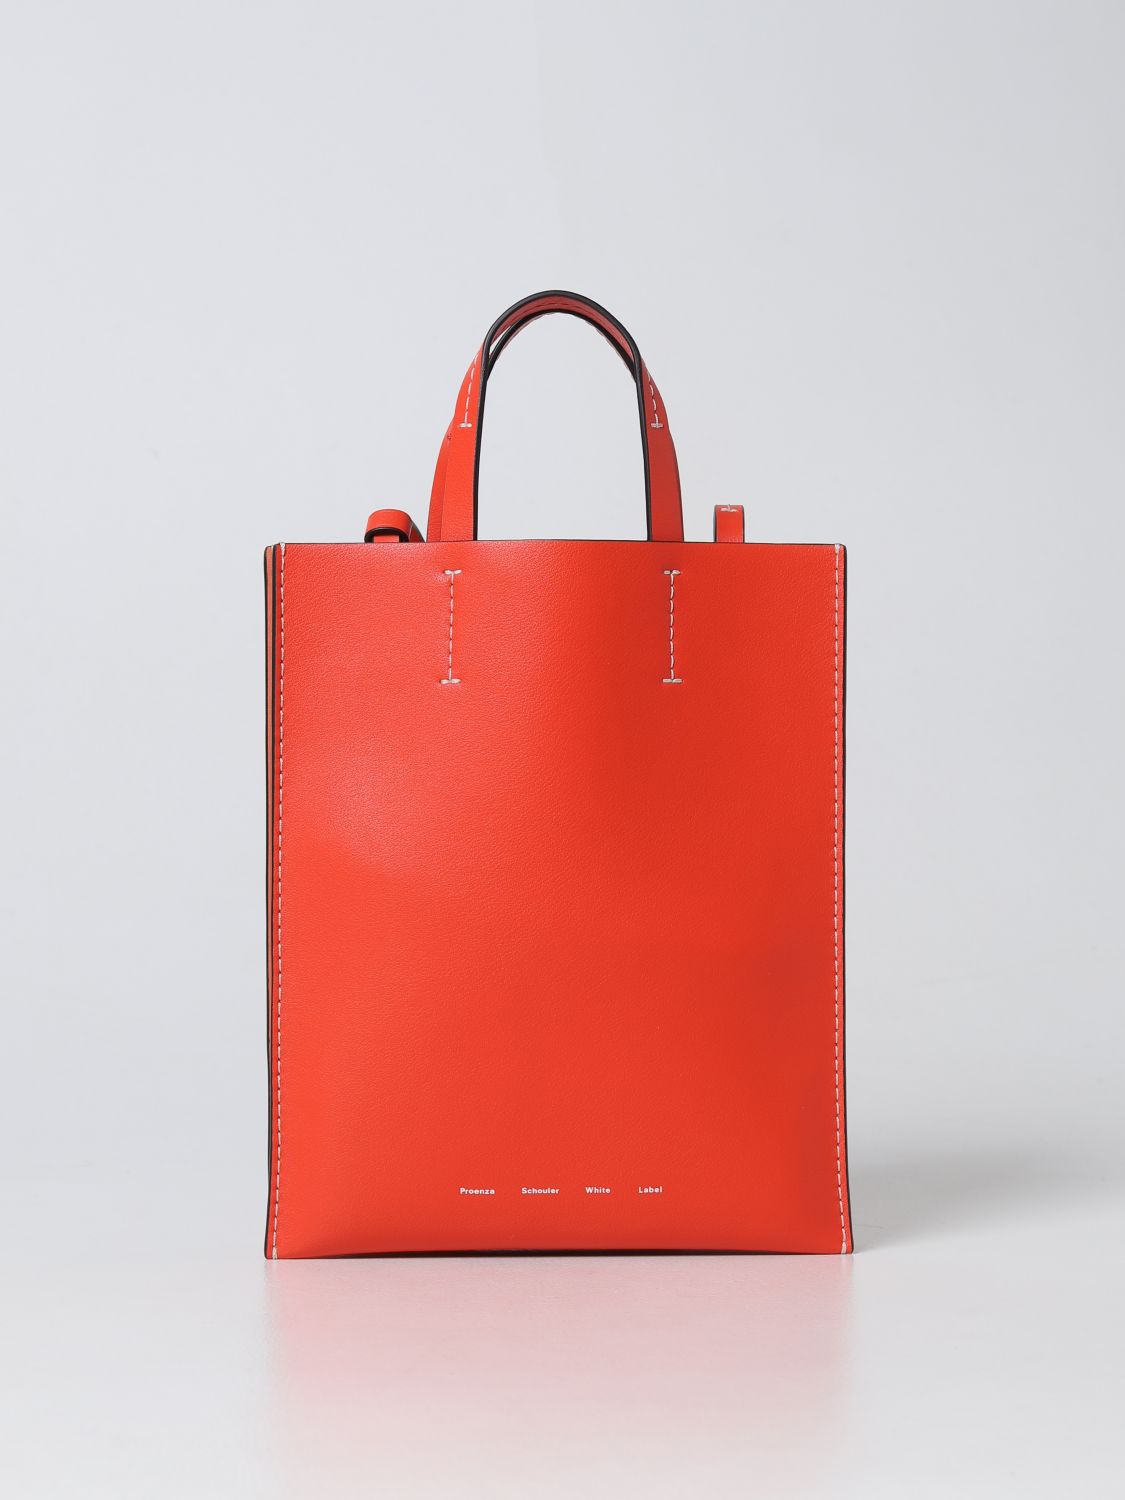 Shop Bags  Proenza Schouler - Official Site